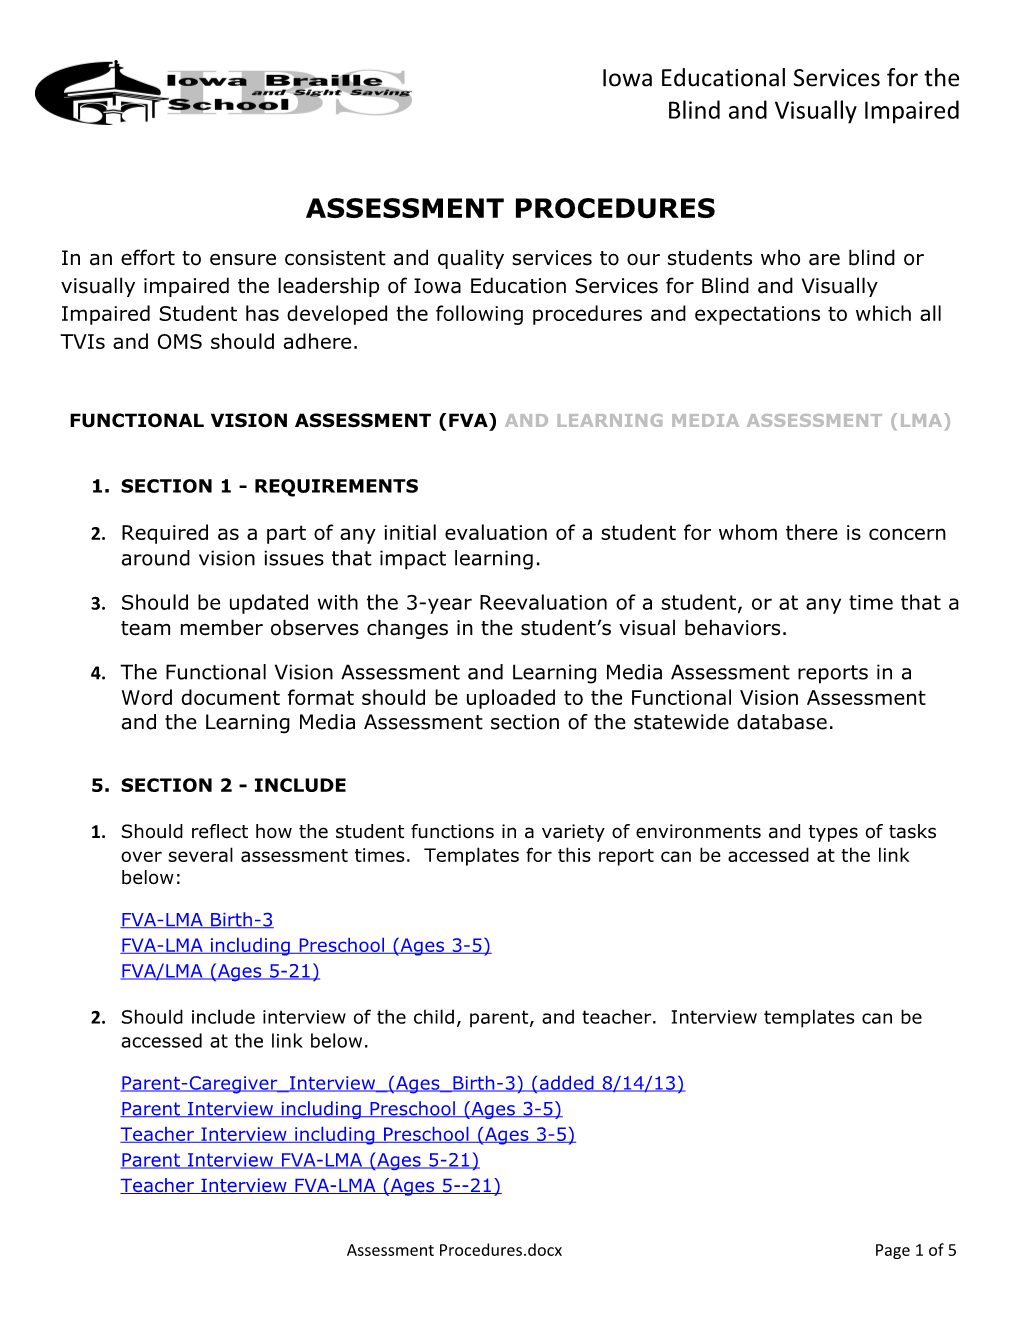 Functional Vision Assessment (Fva) and Learning Media Assessment (Lma)